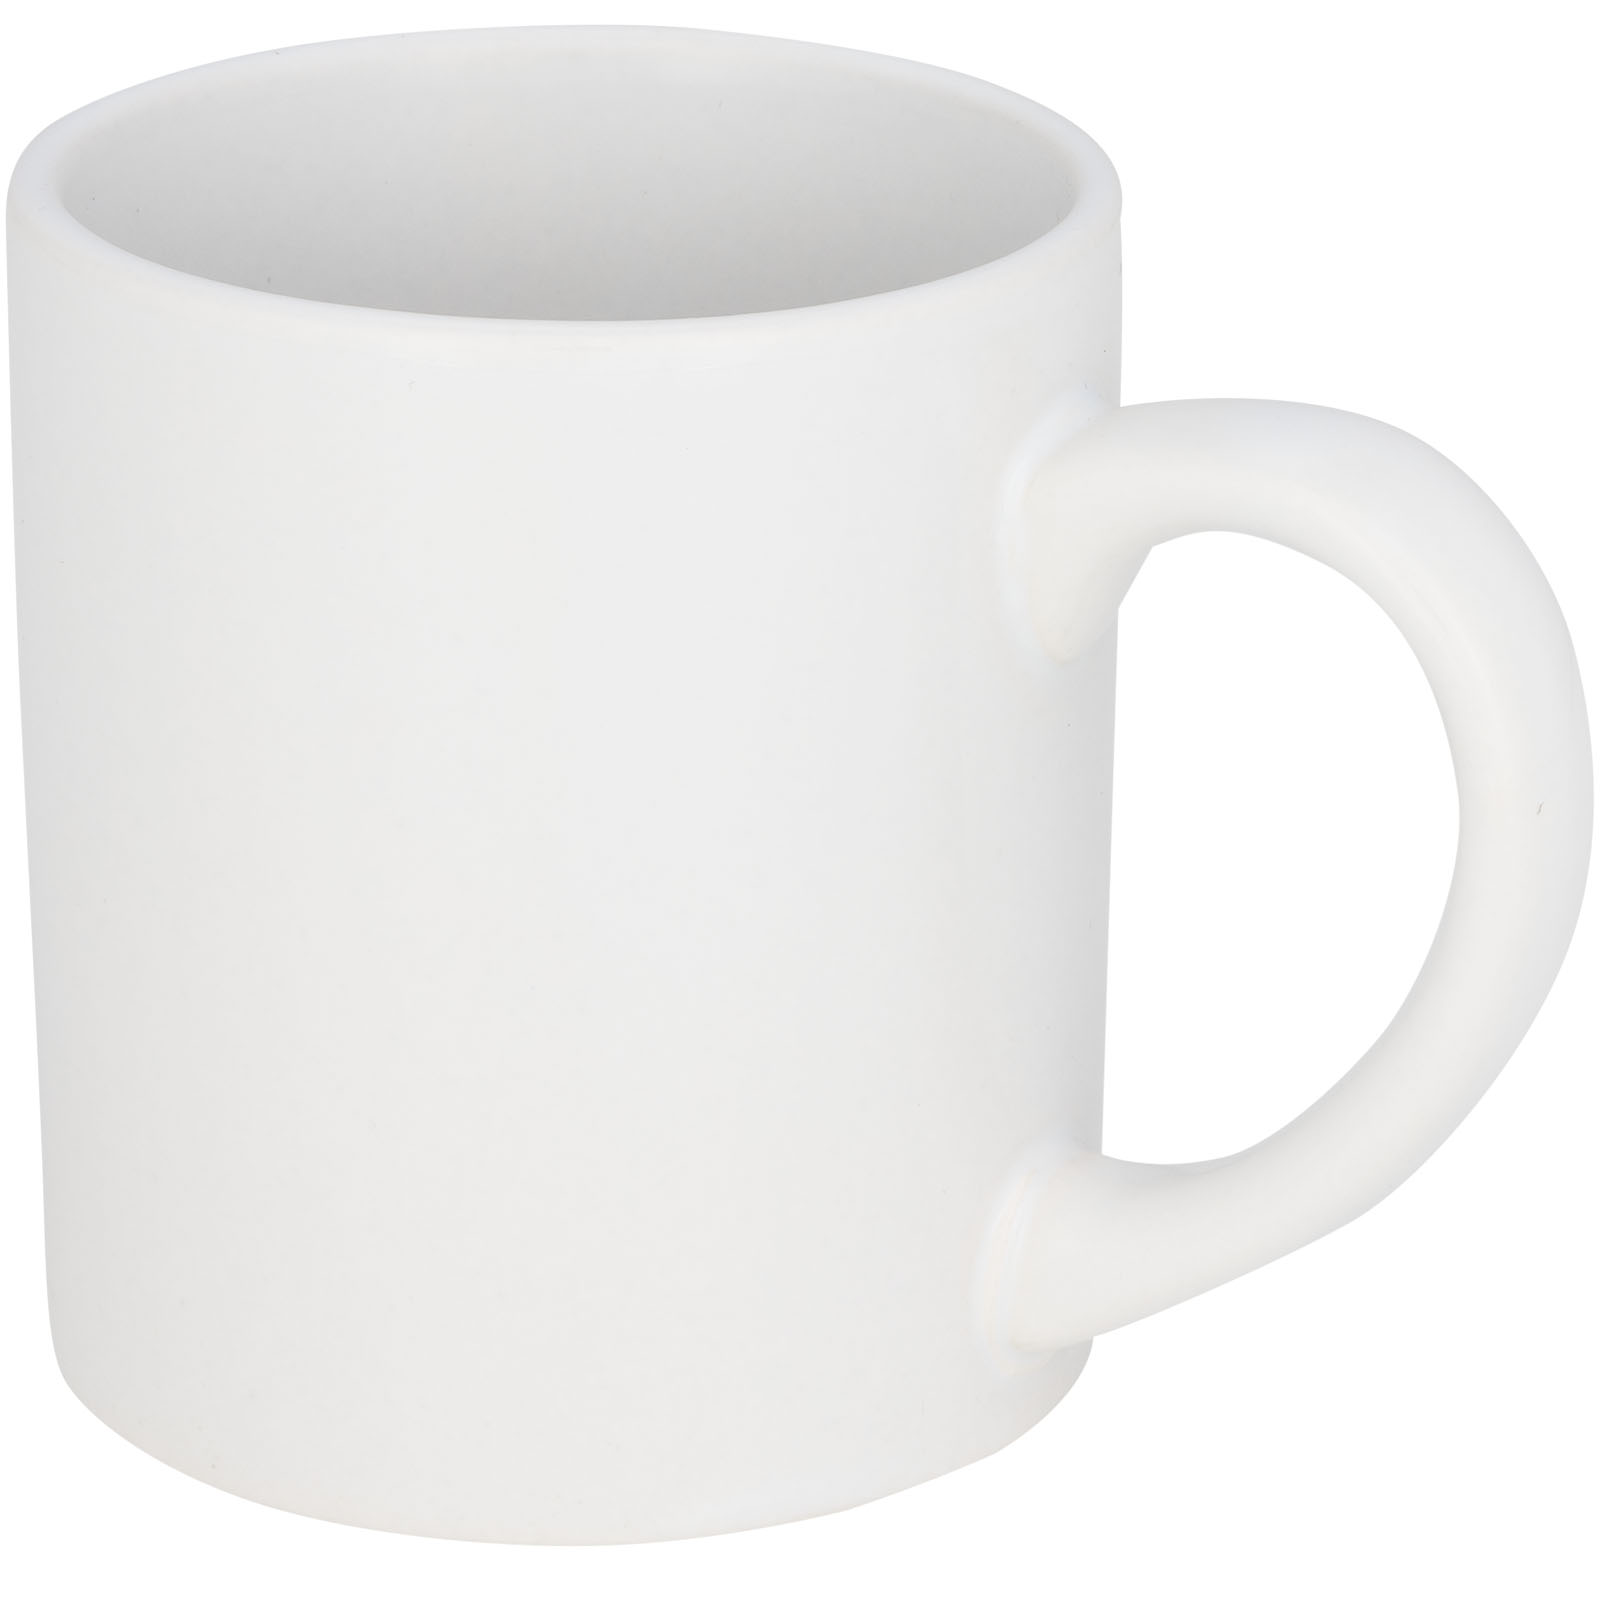 Standard mugs - Pixi 210 ml mini ceramic sublimation mug